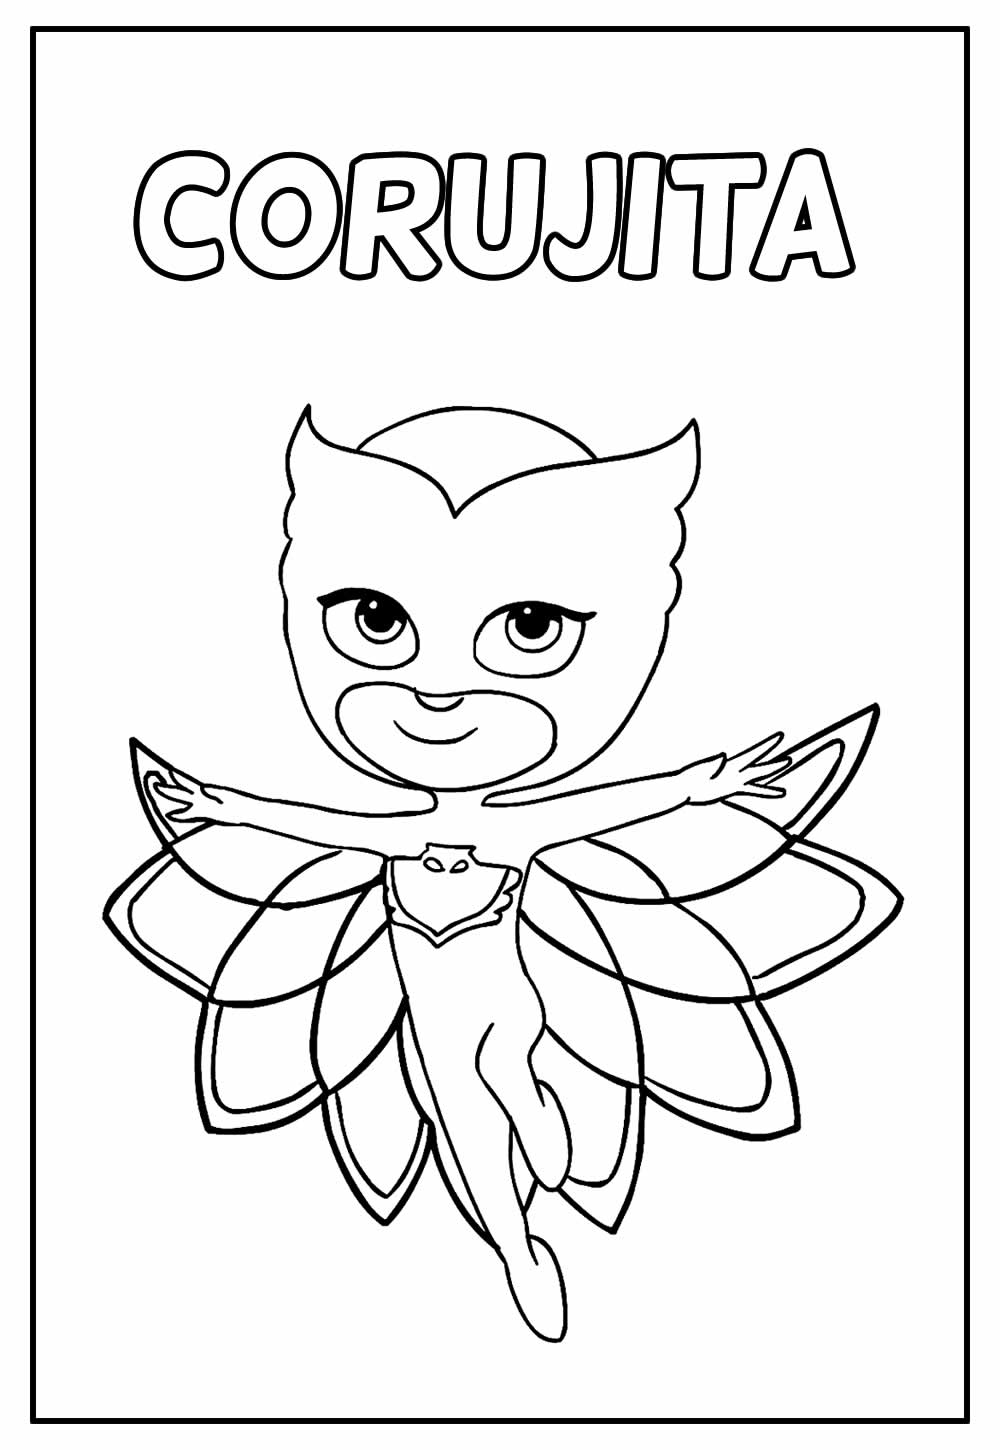 Desenho Educativo da Corujita para colorir